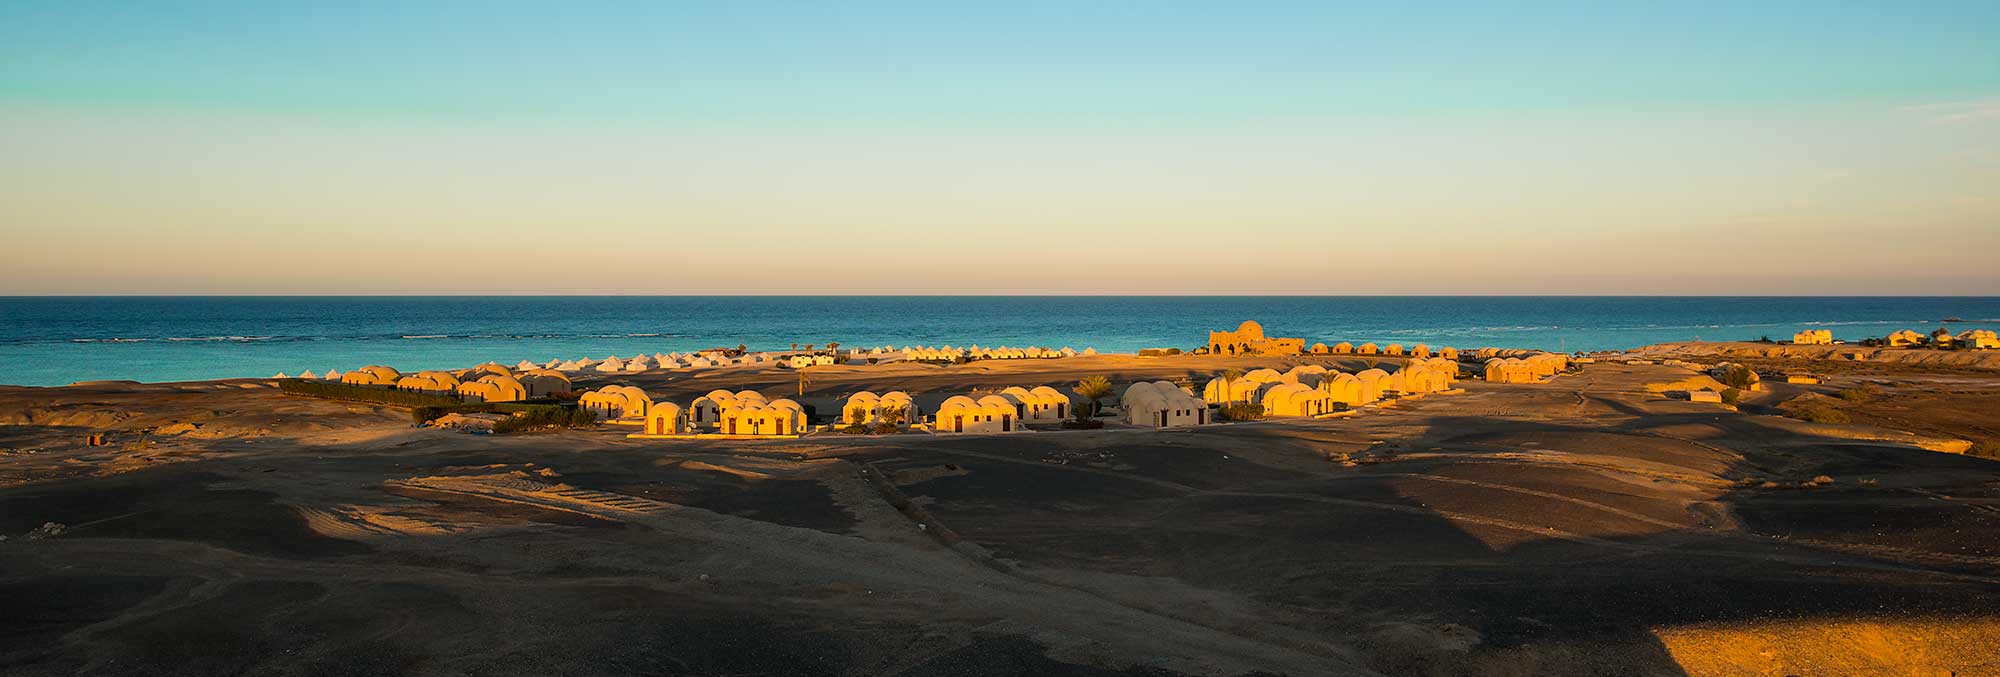 Marsa Shagra Dive Camp, southern Red Sea - Egypt